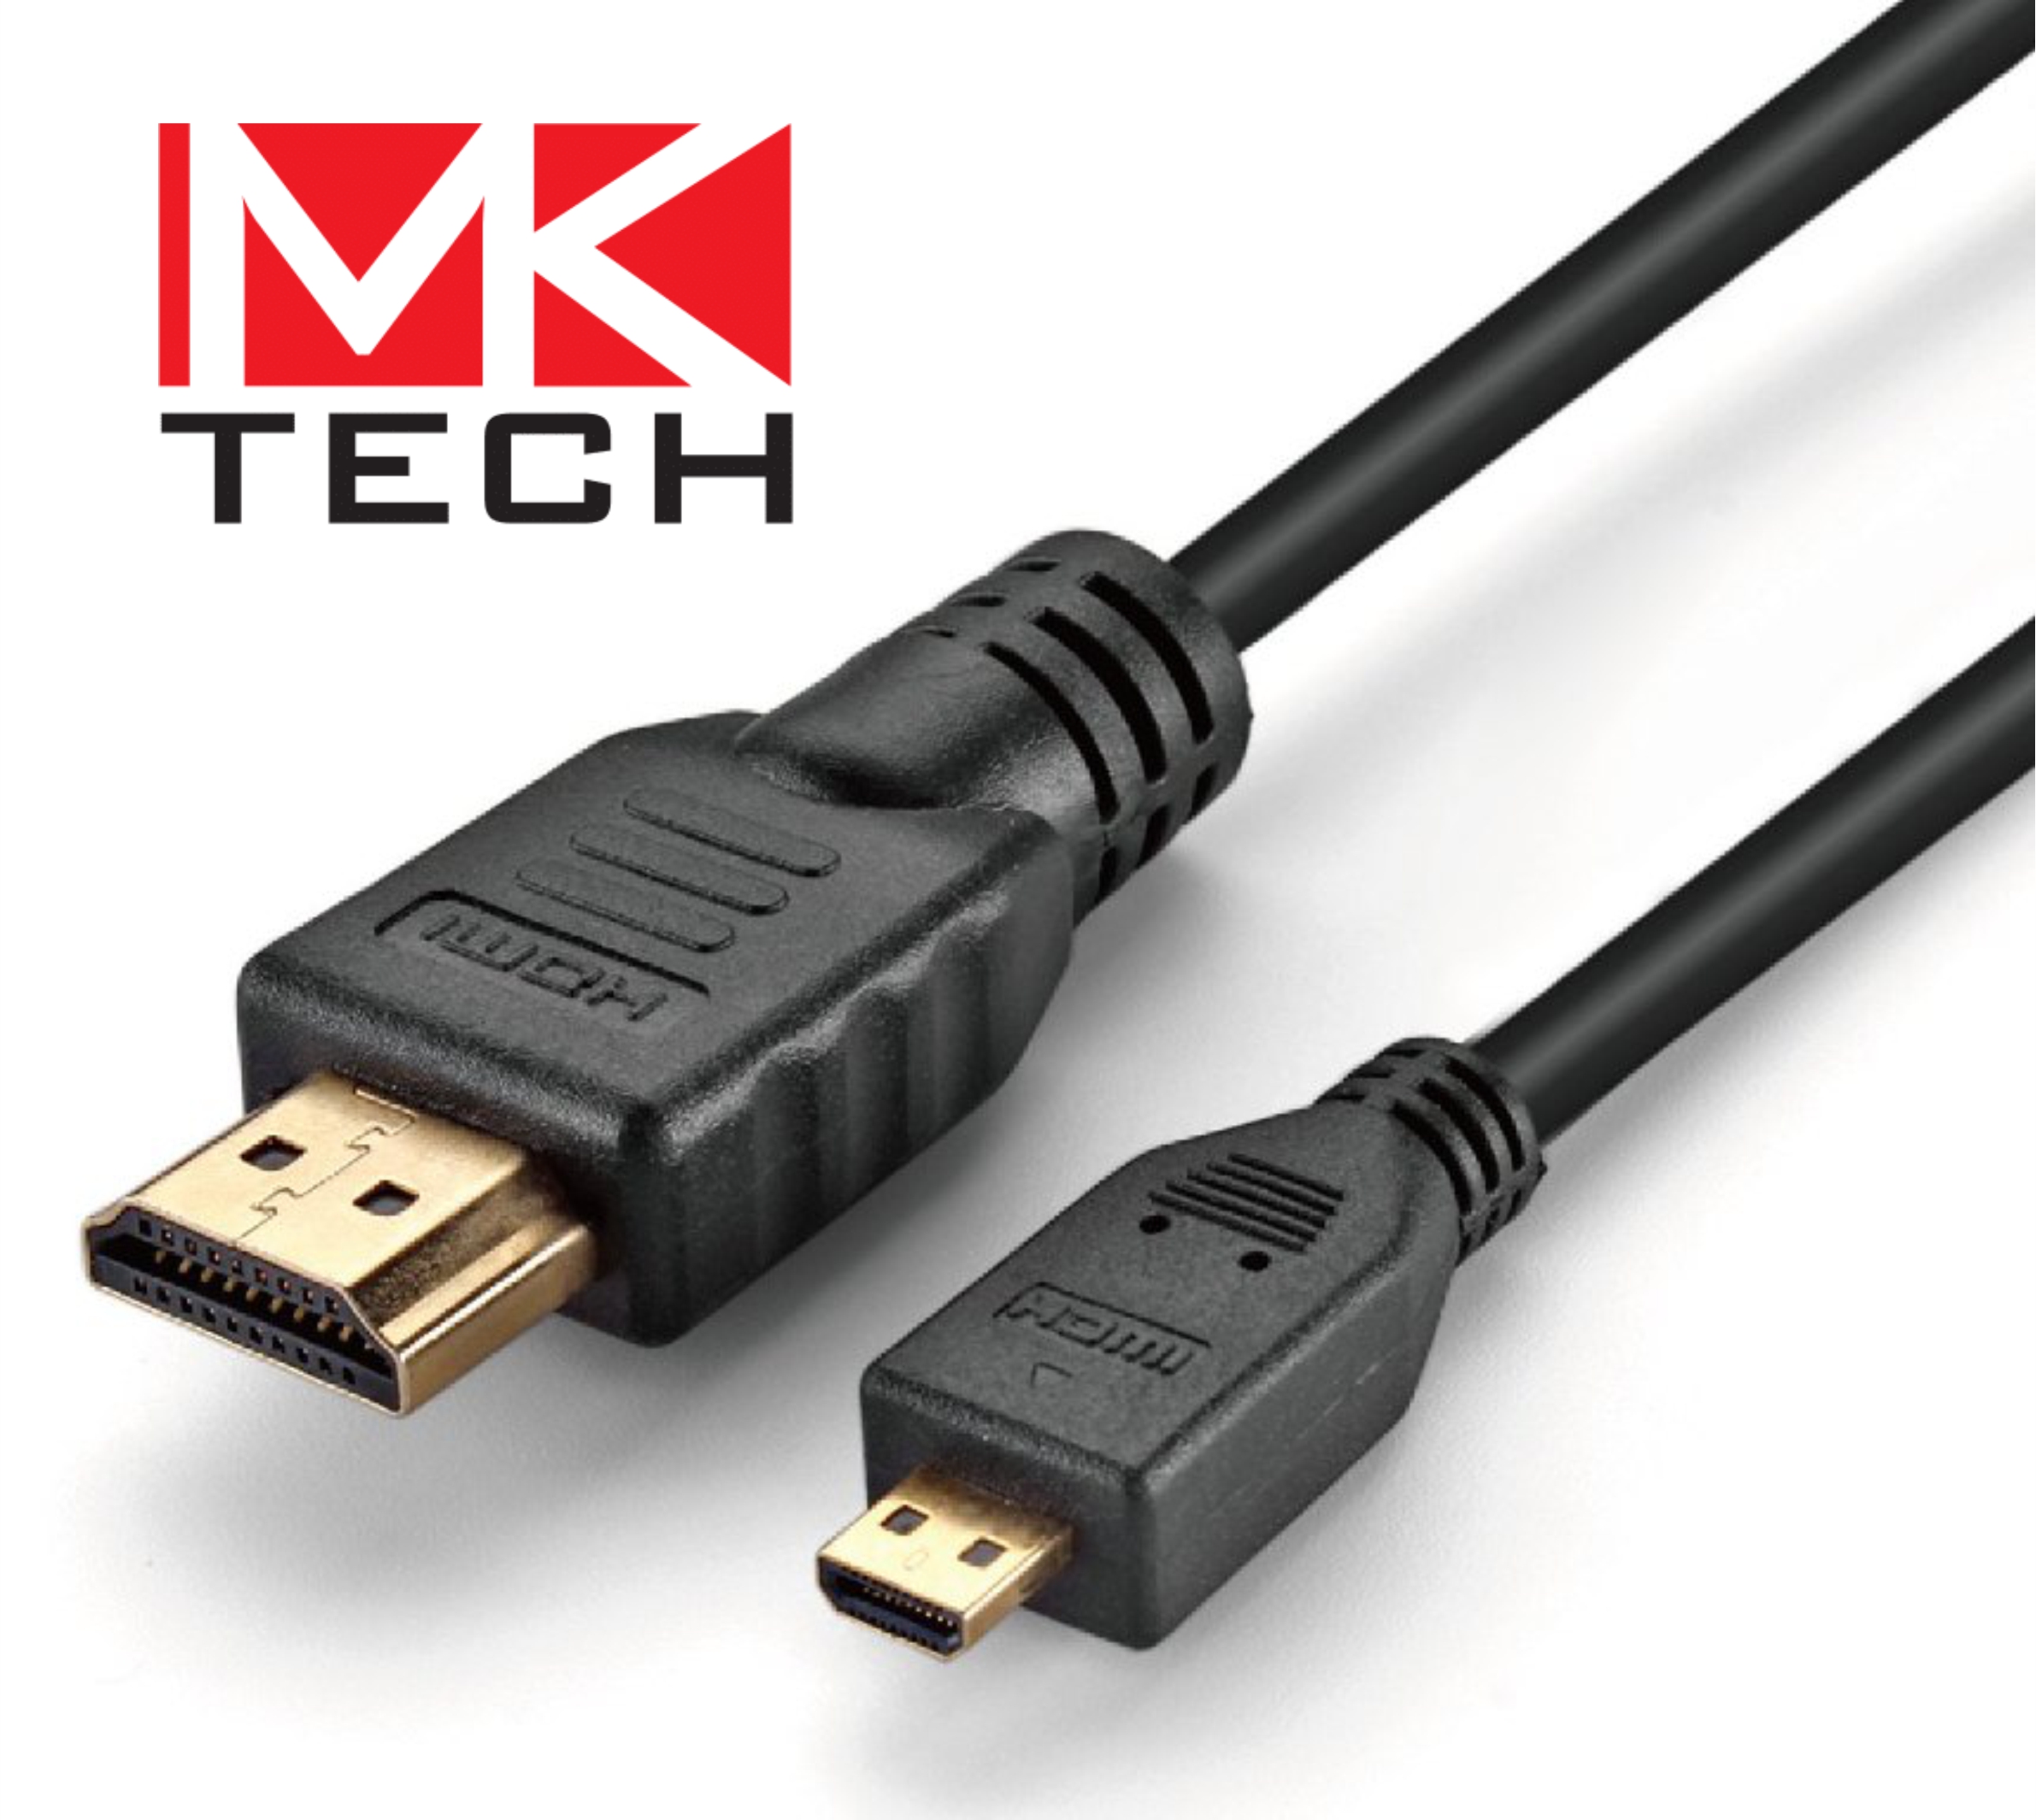 HDMI to HDMI Micro (type D) 4.5m MKTECH